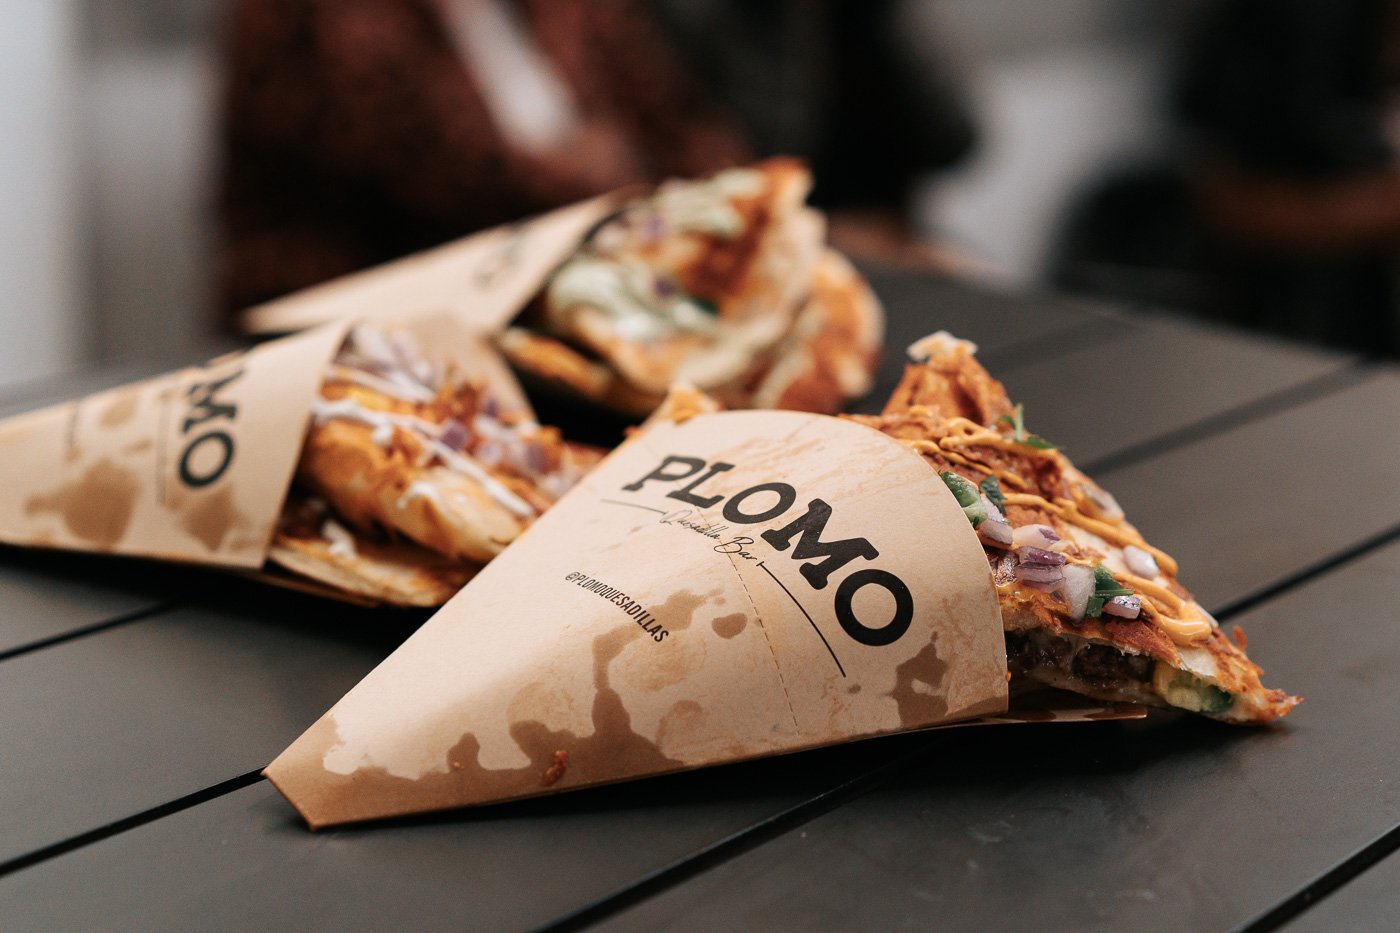 Three quesadillas sit in cardboard sleeves on a wooden table. The sleeves read: “Plomo Quesadillas.”